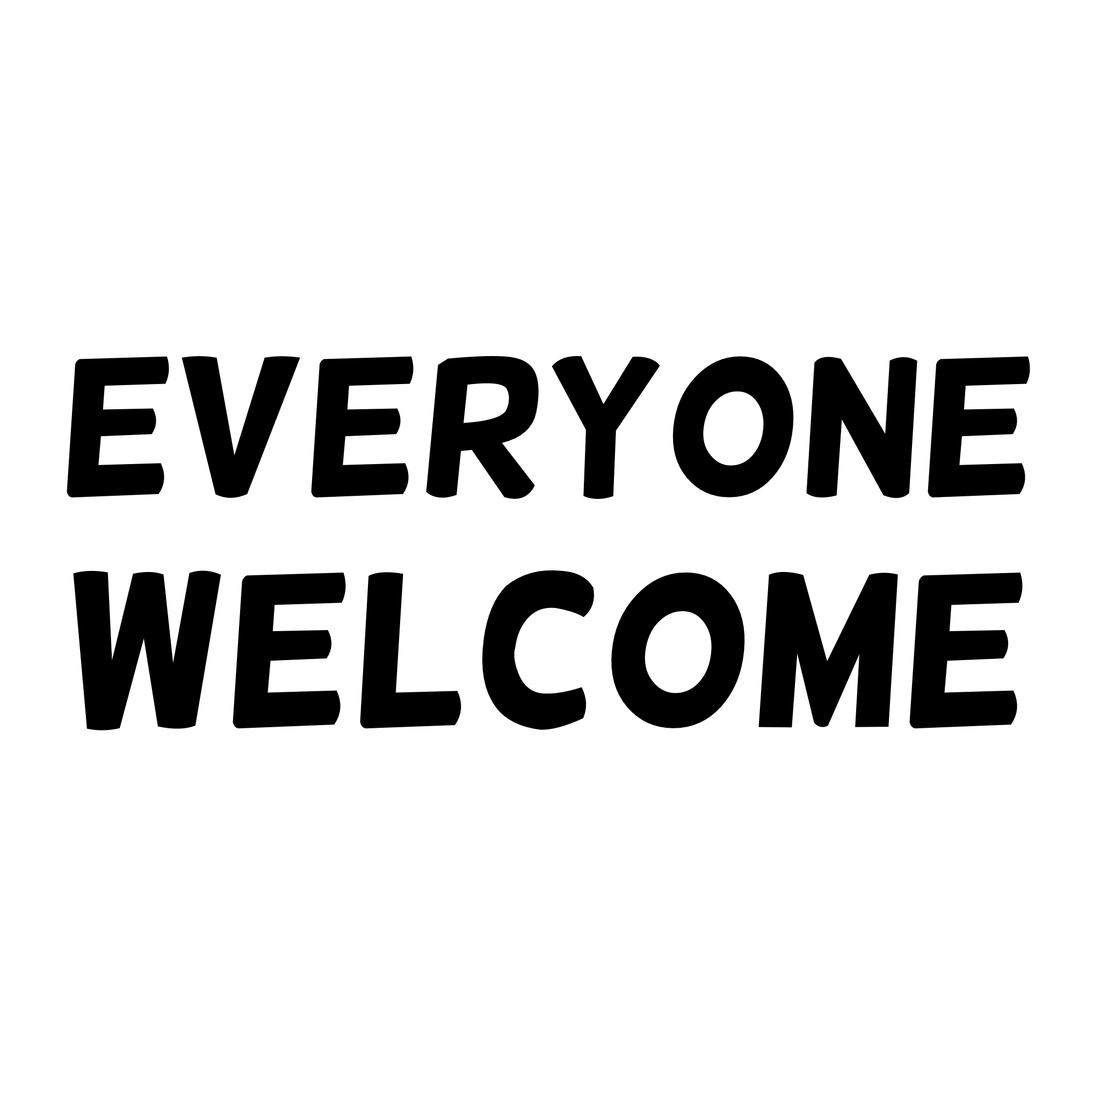  Everyone Welcome